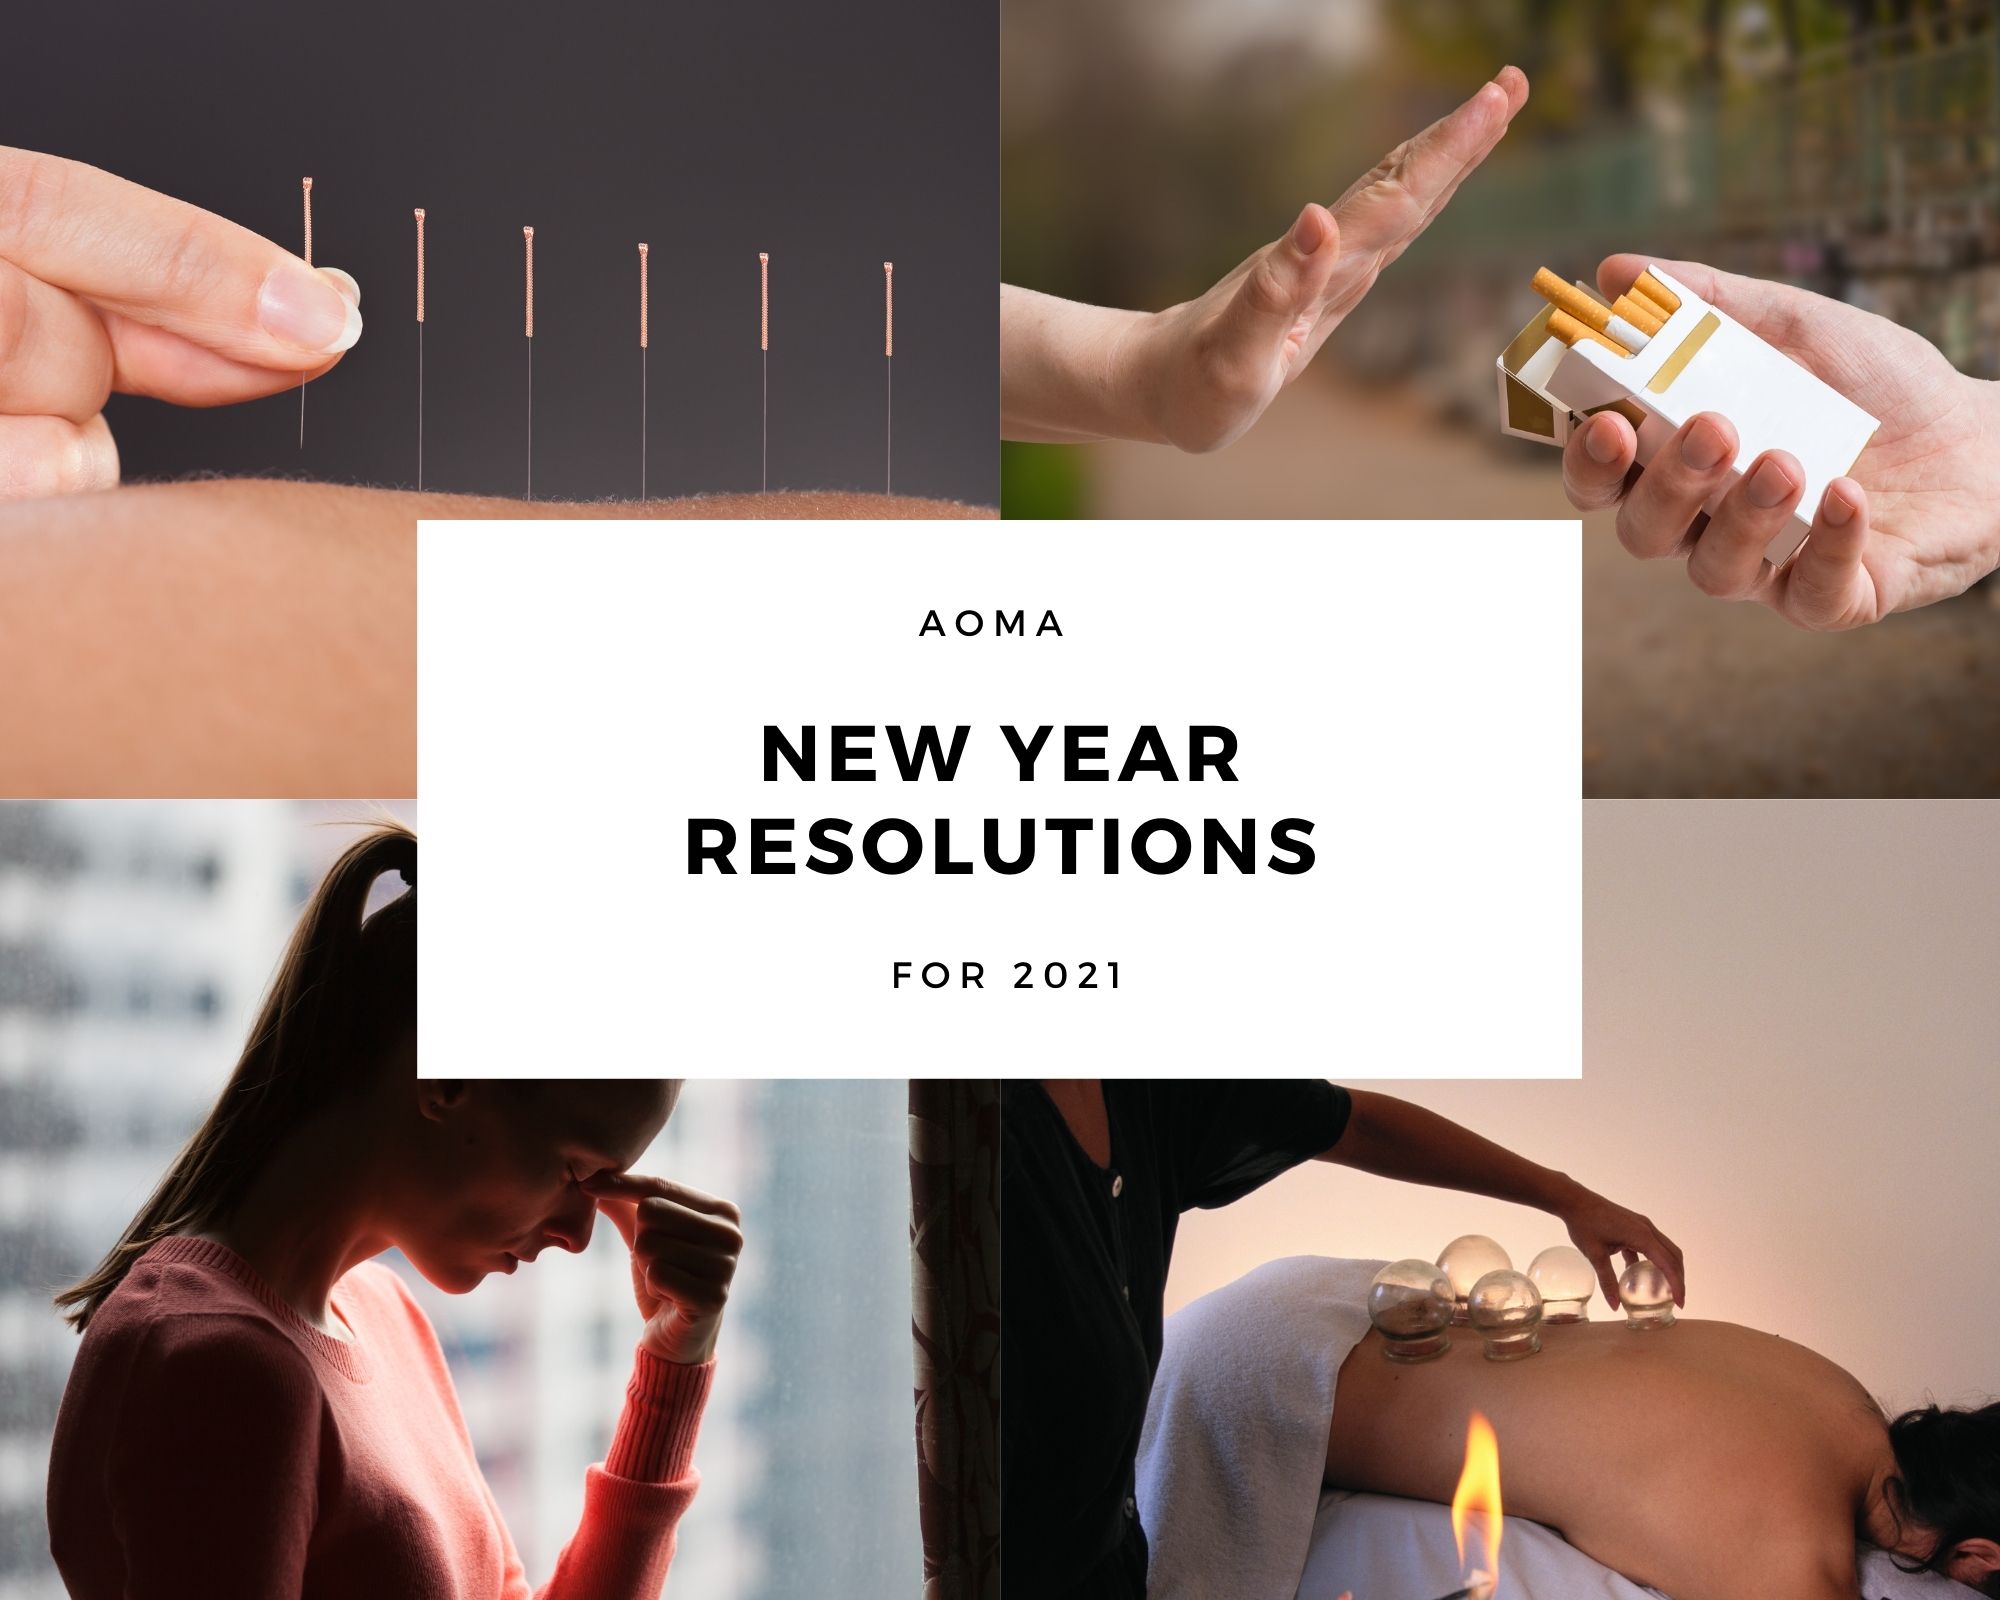 new years resolutioners reddit